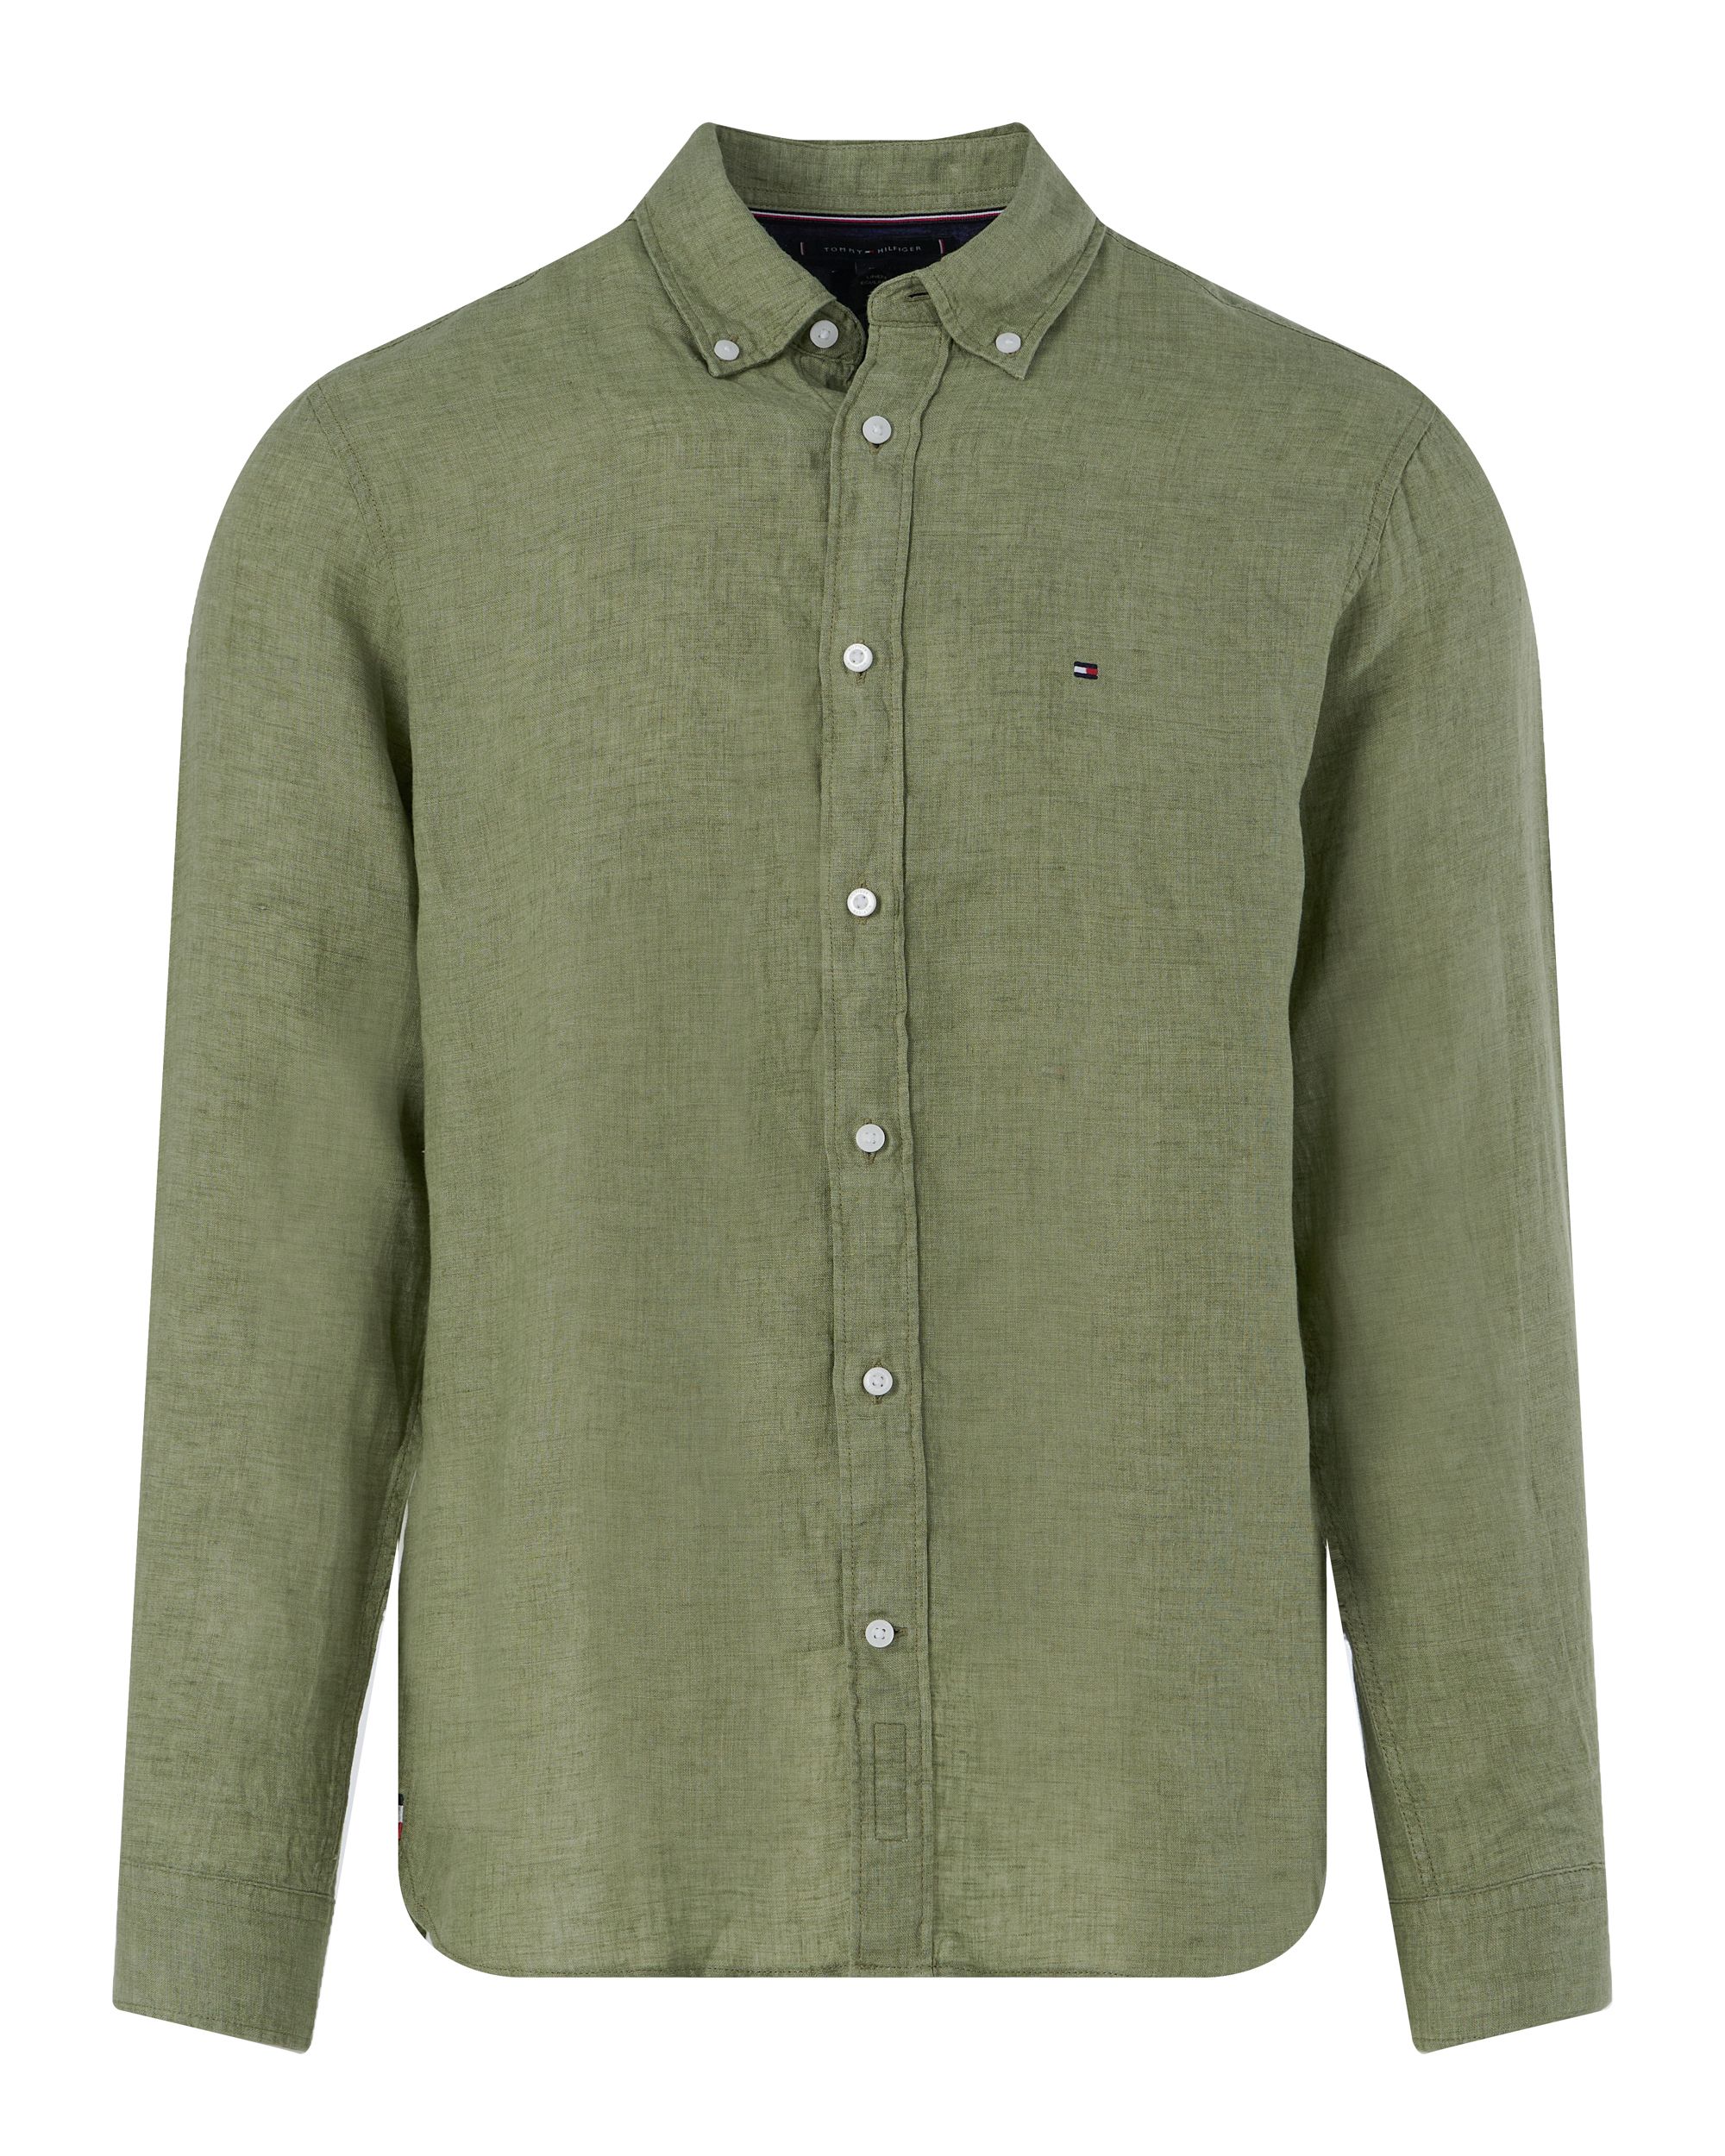 Tommy Hilfiger Menswear Casual Overhemd LM Groen 094642-001-L